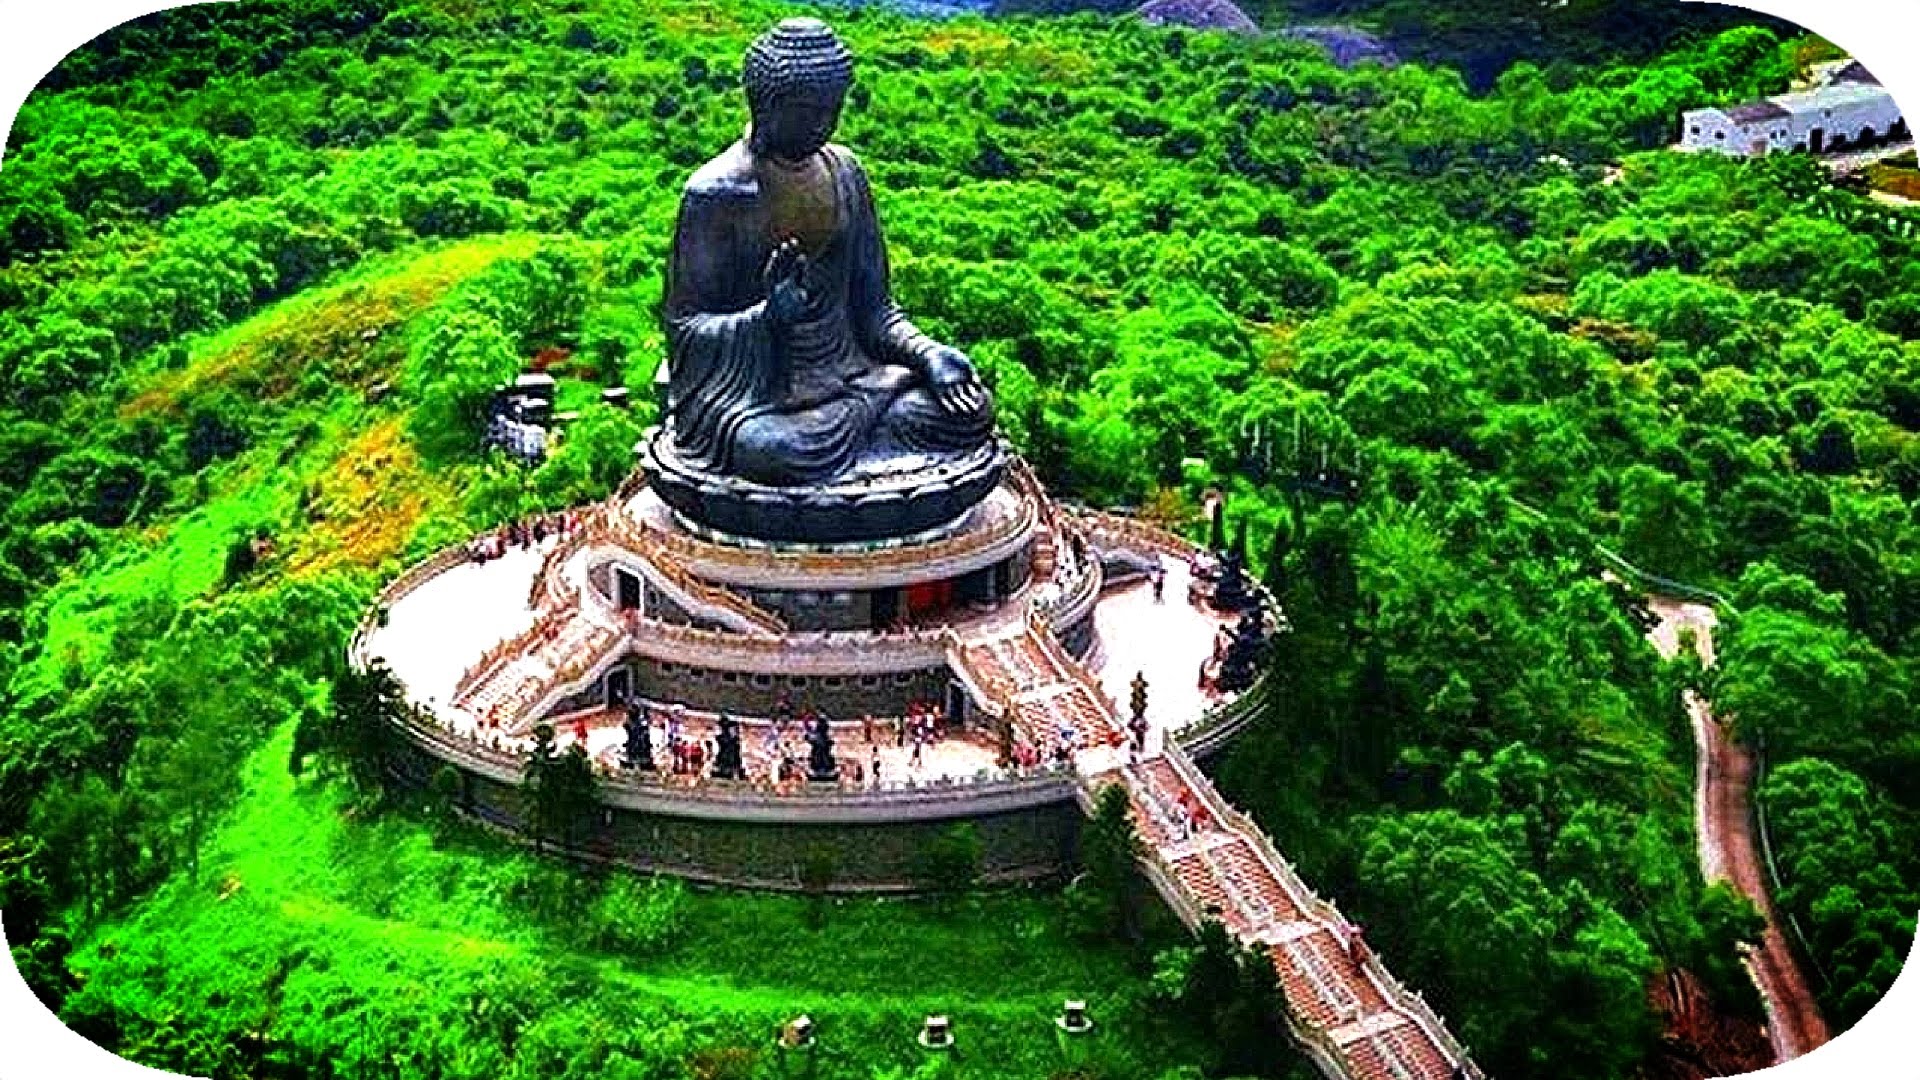 Шри 12. Большой Будда Лантау. Шри Ланка Будда. Лантау Китай. Будда на острове Лантау.